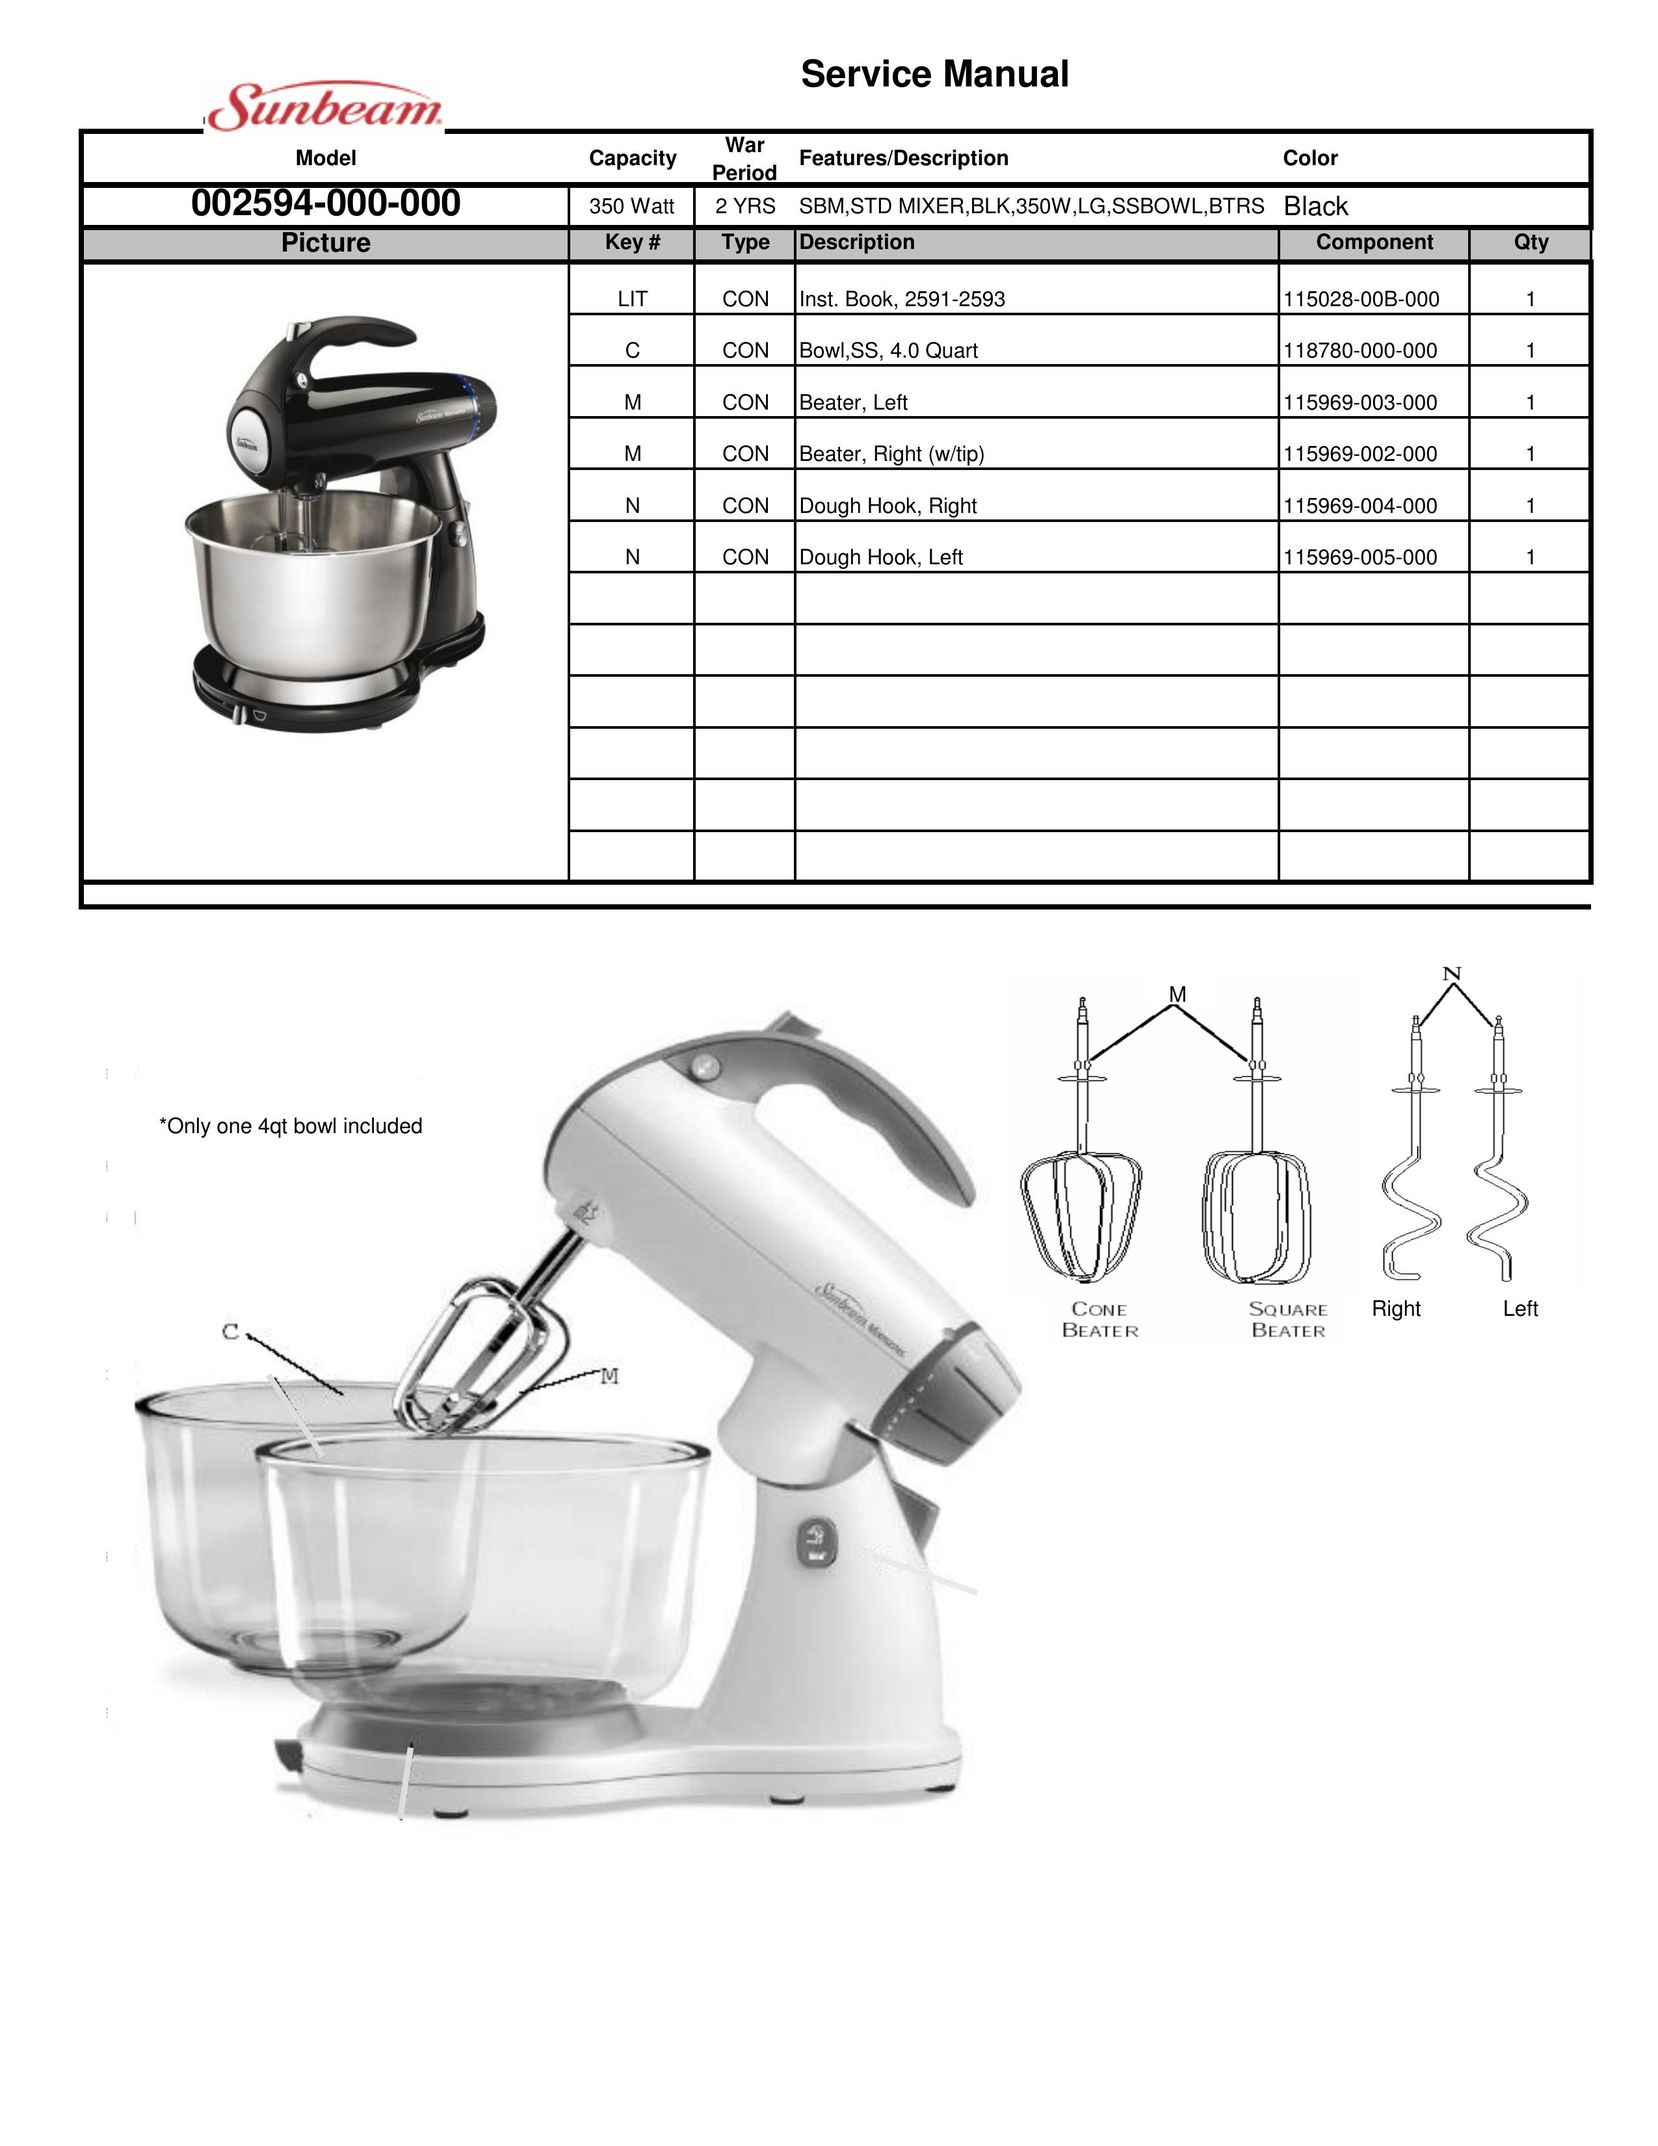 Sunbeam 002594-000-000 Mixer User Manual